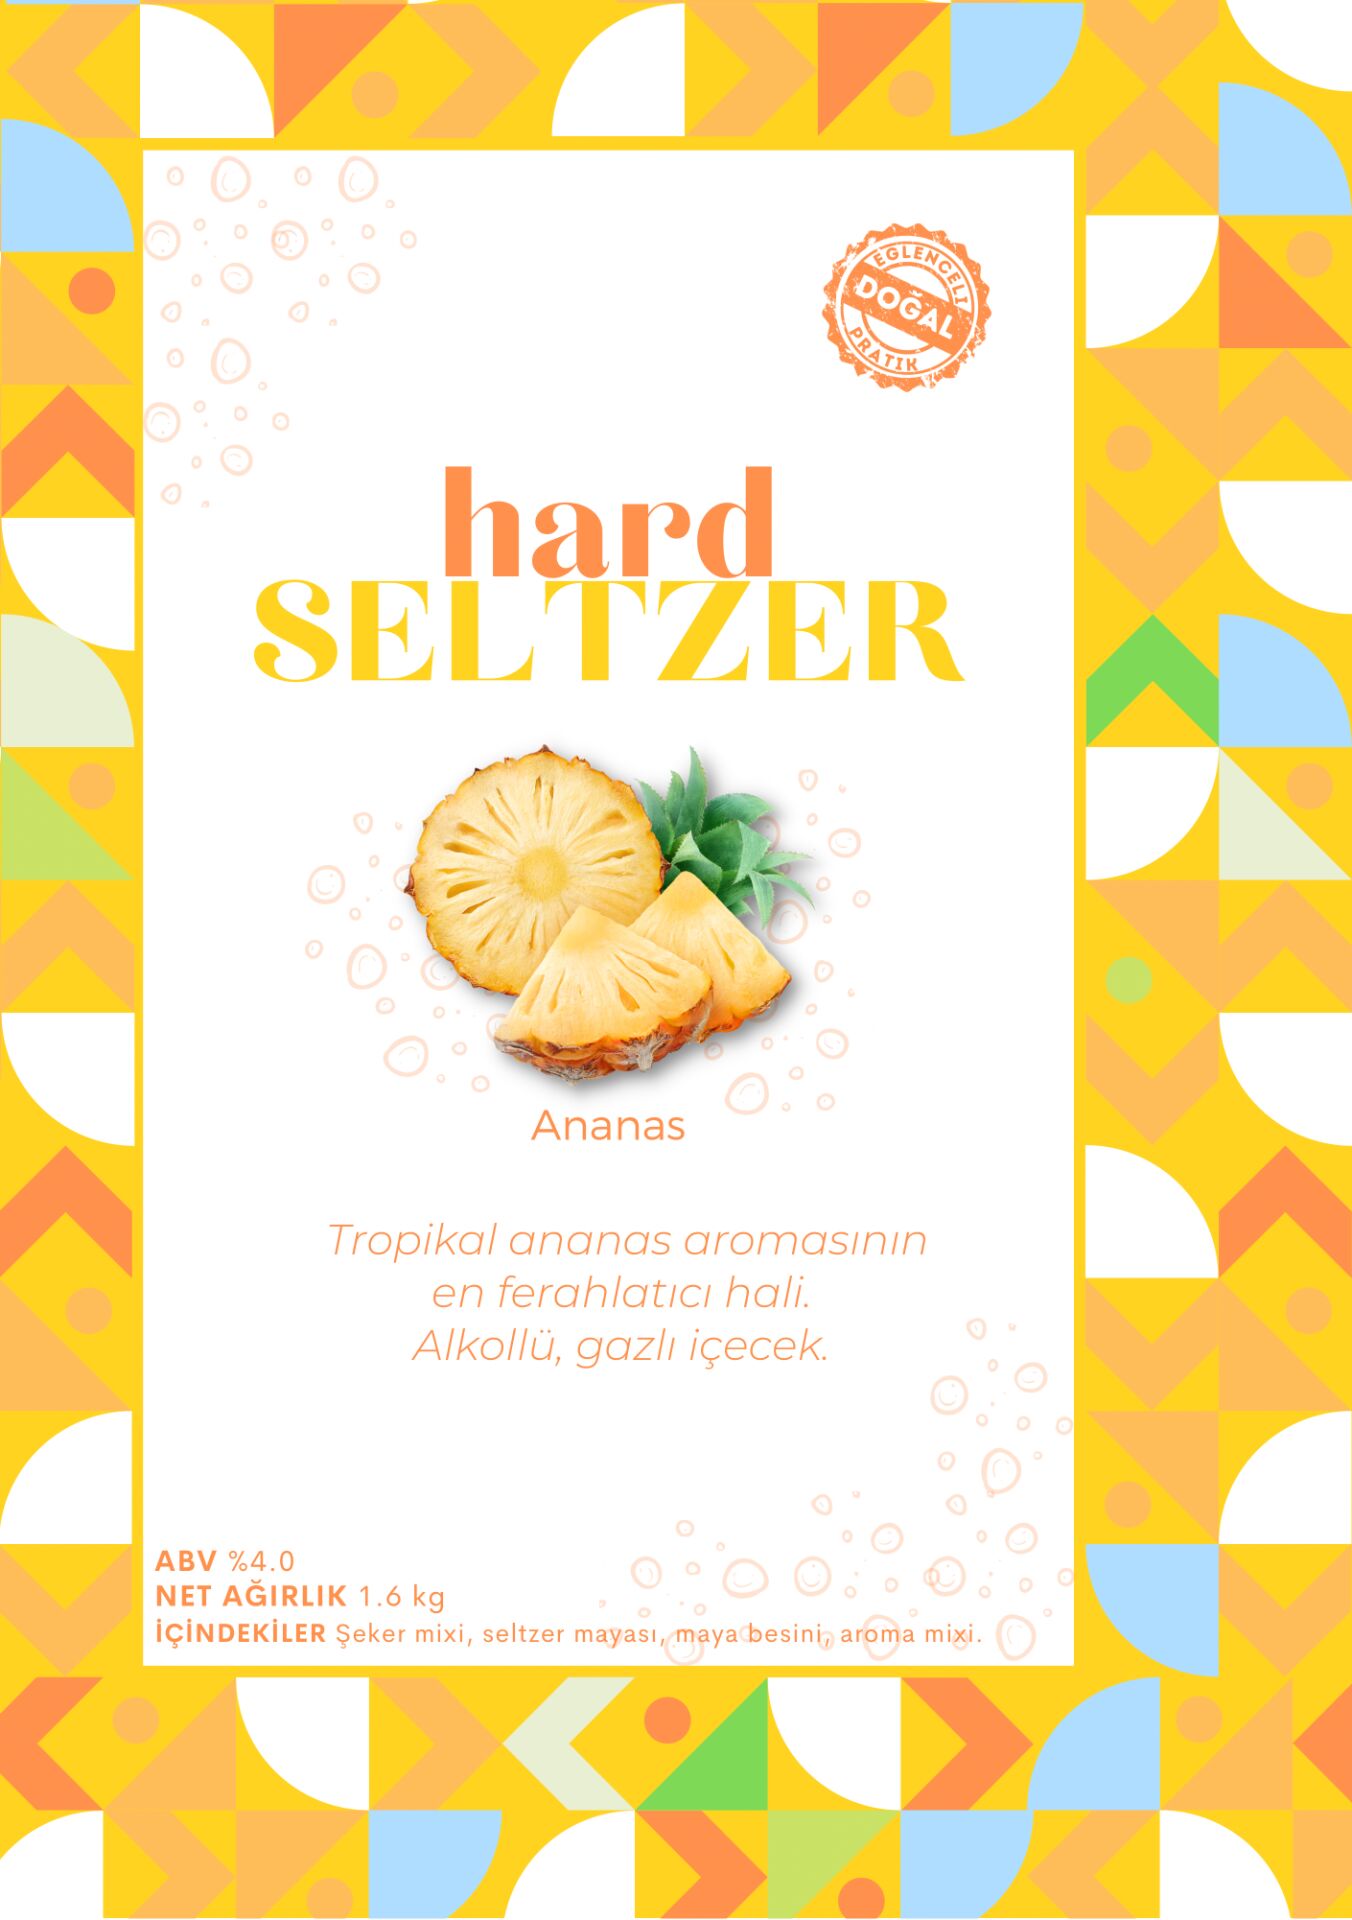 Hard Seltzer - Ananaslı